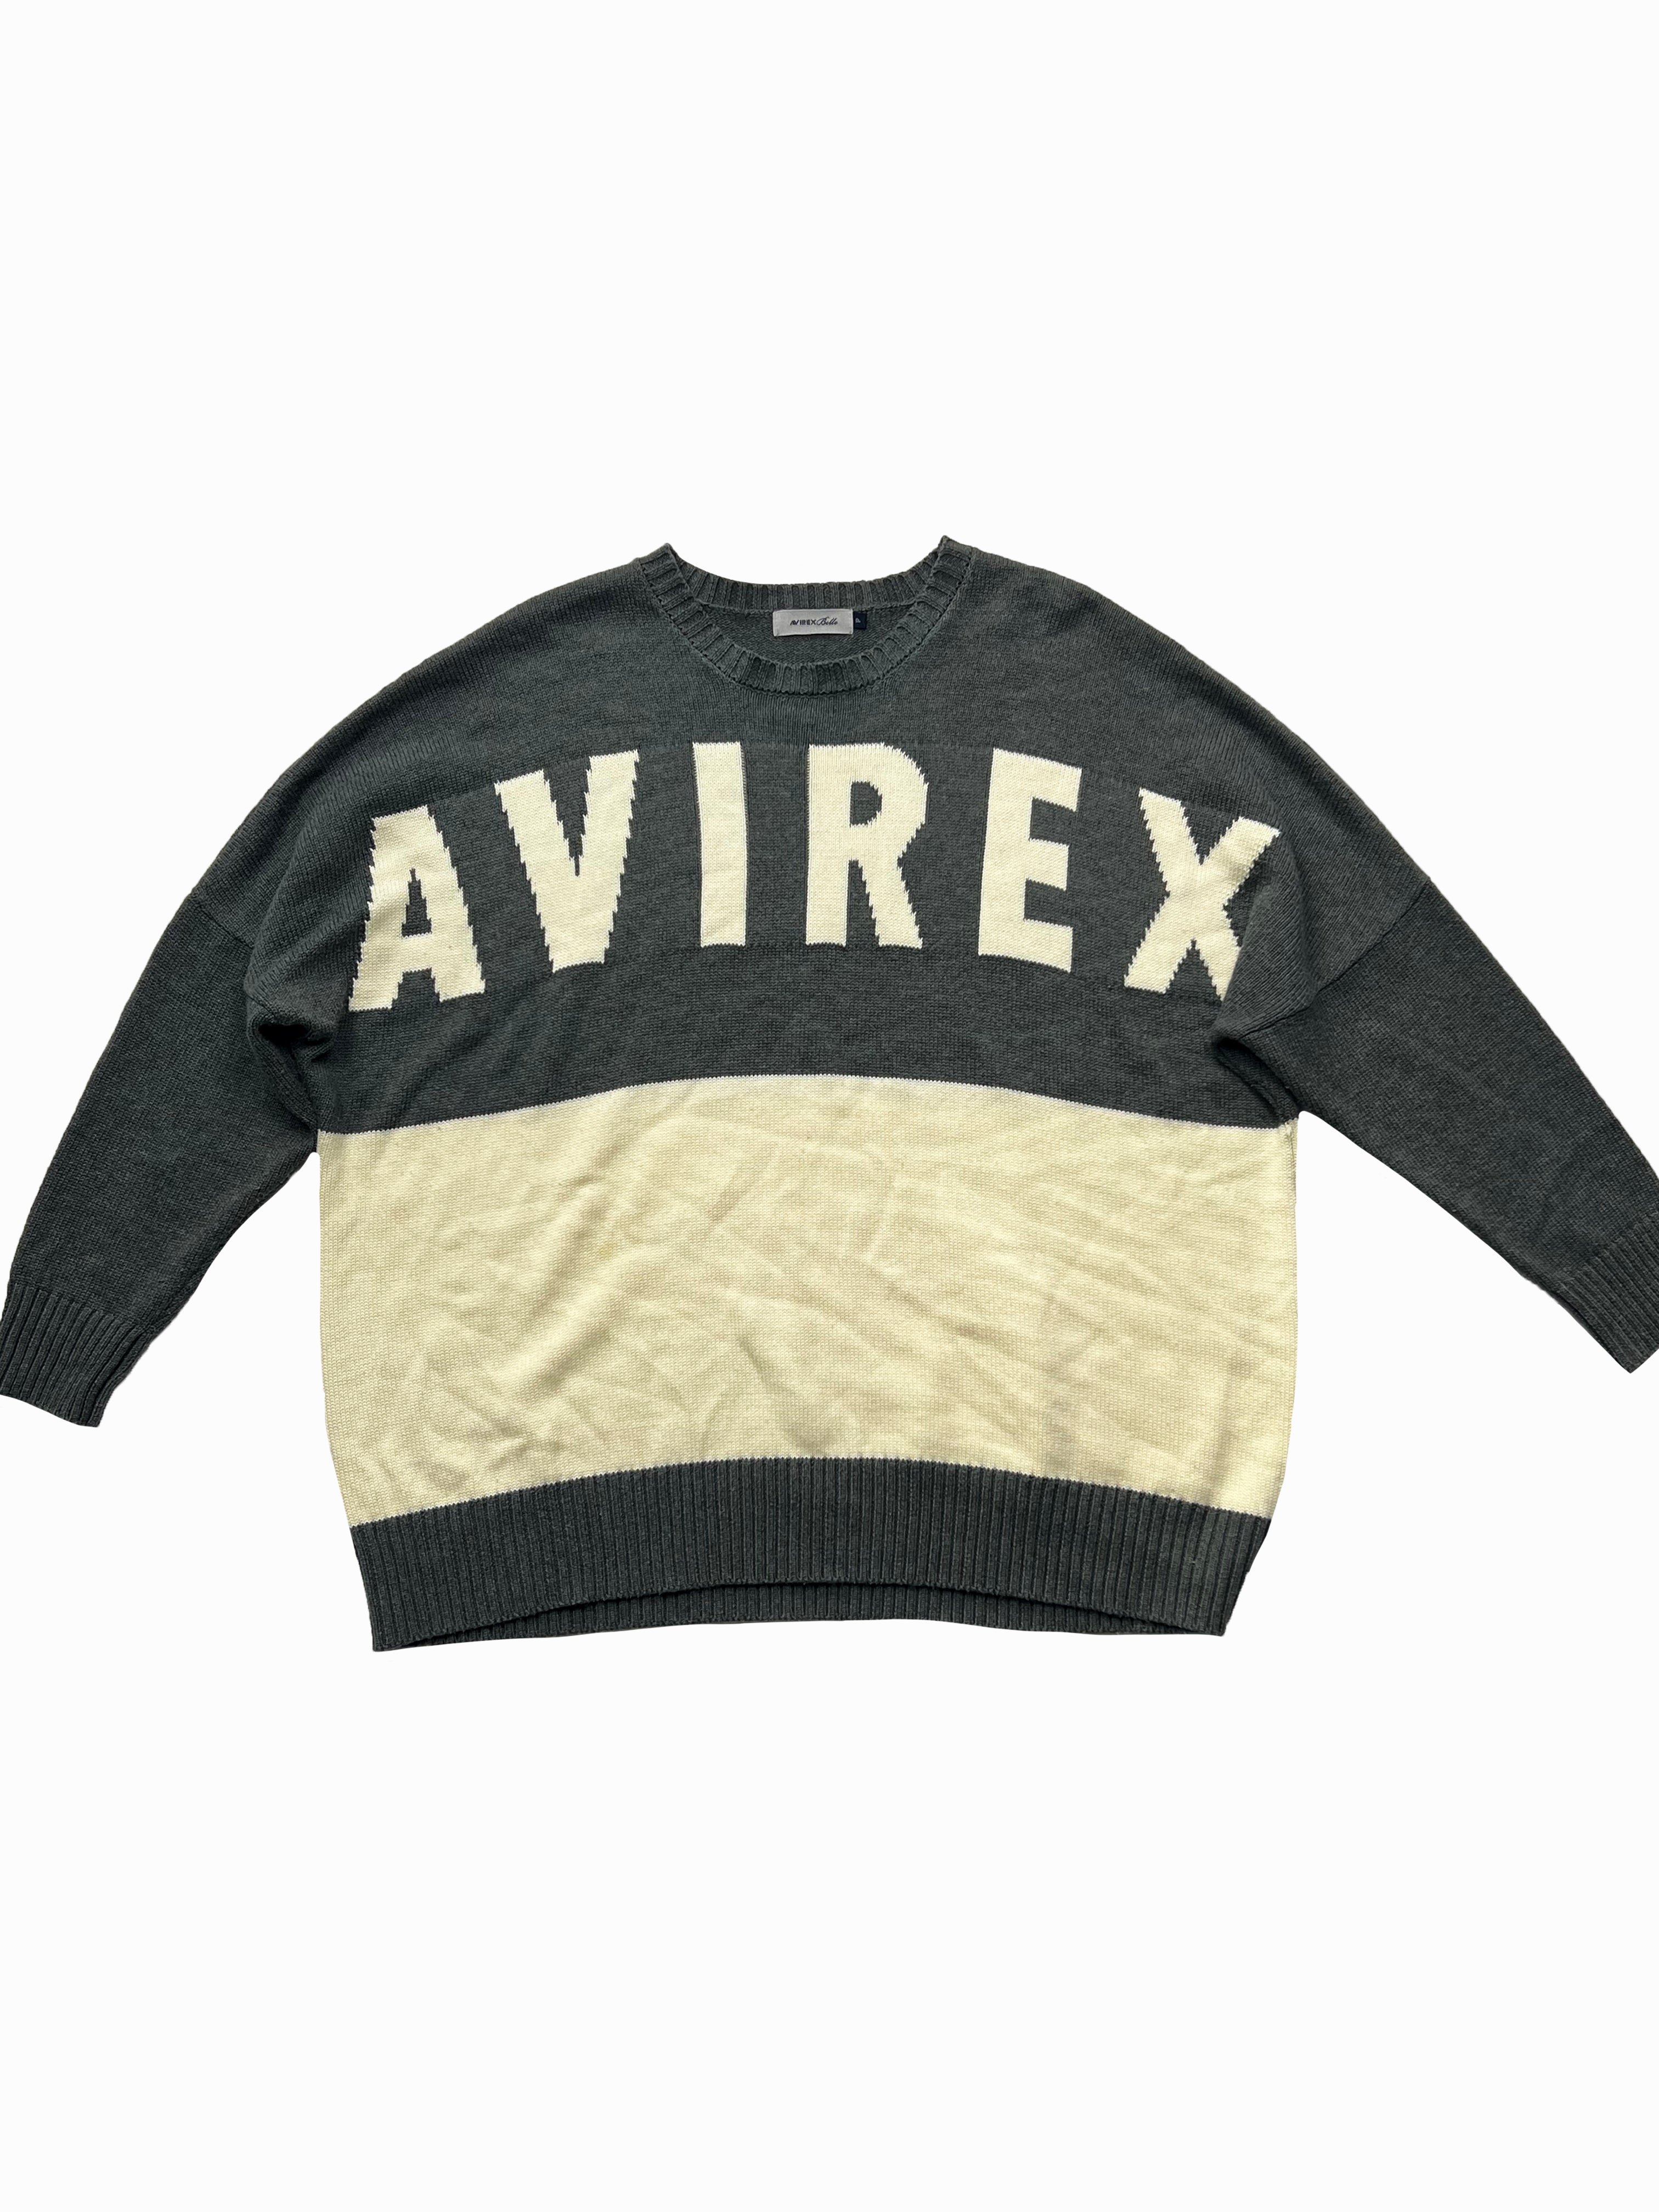 Avirex Grey & Beige Spell Out Knit